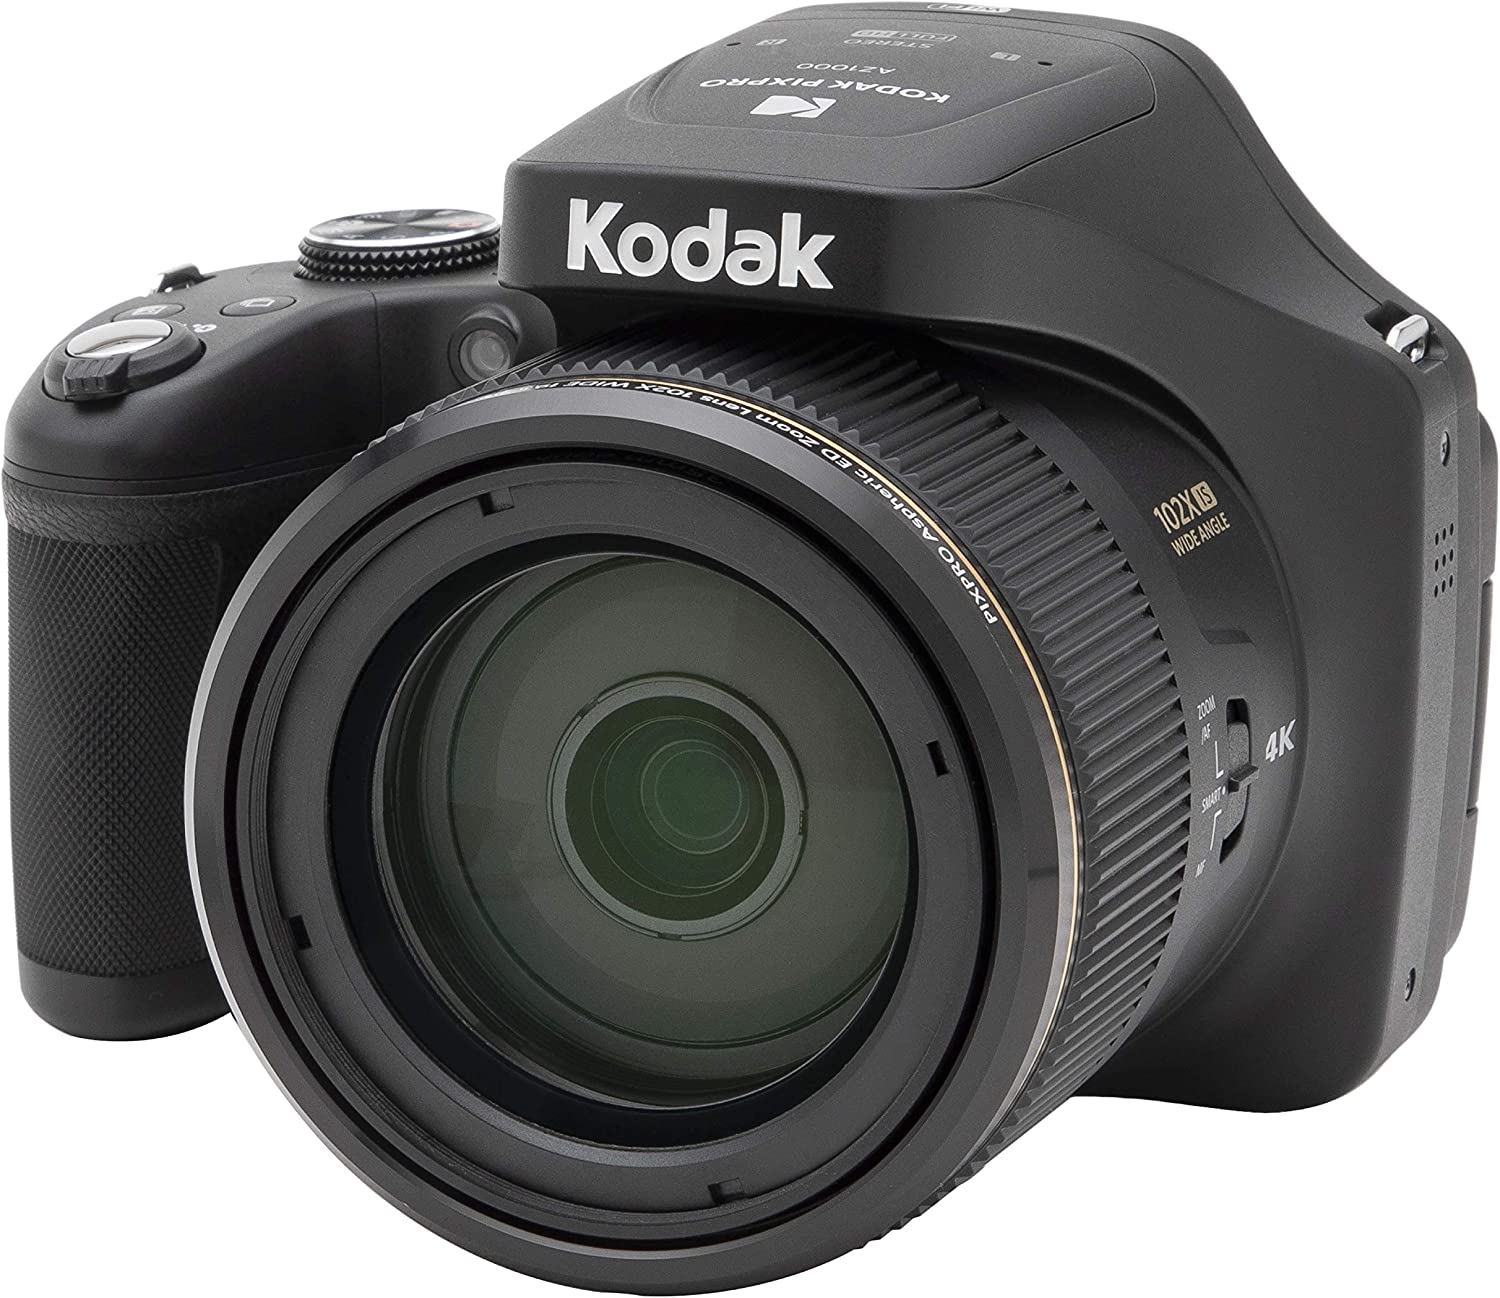 Kodak PIXPRO AZ1000 4K 20MP Black Digital Camera with 102x Optical Zoom